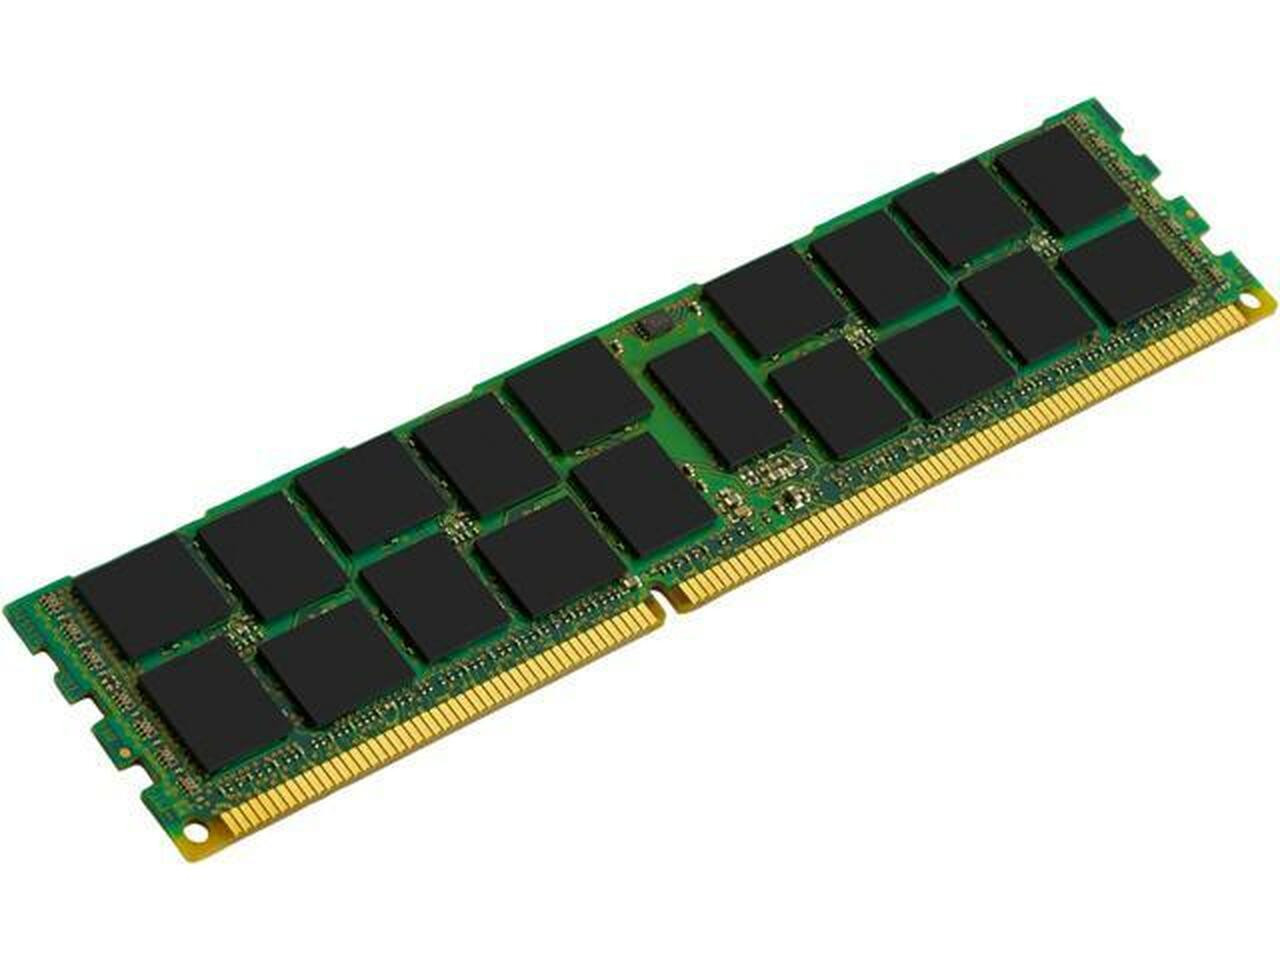 Netpatibles 4GB DDR4 SDRAM Memory Module - AA937597-NPM